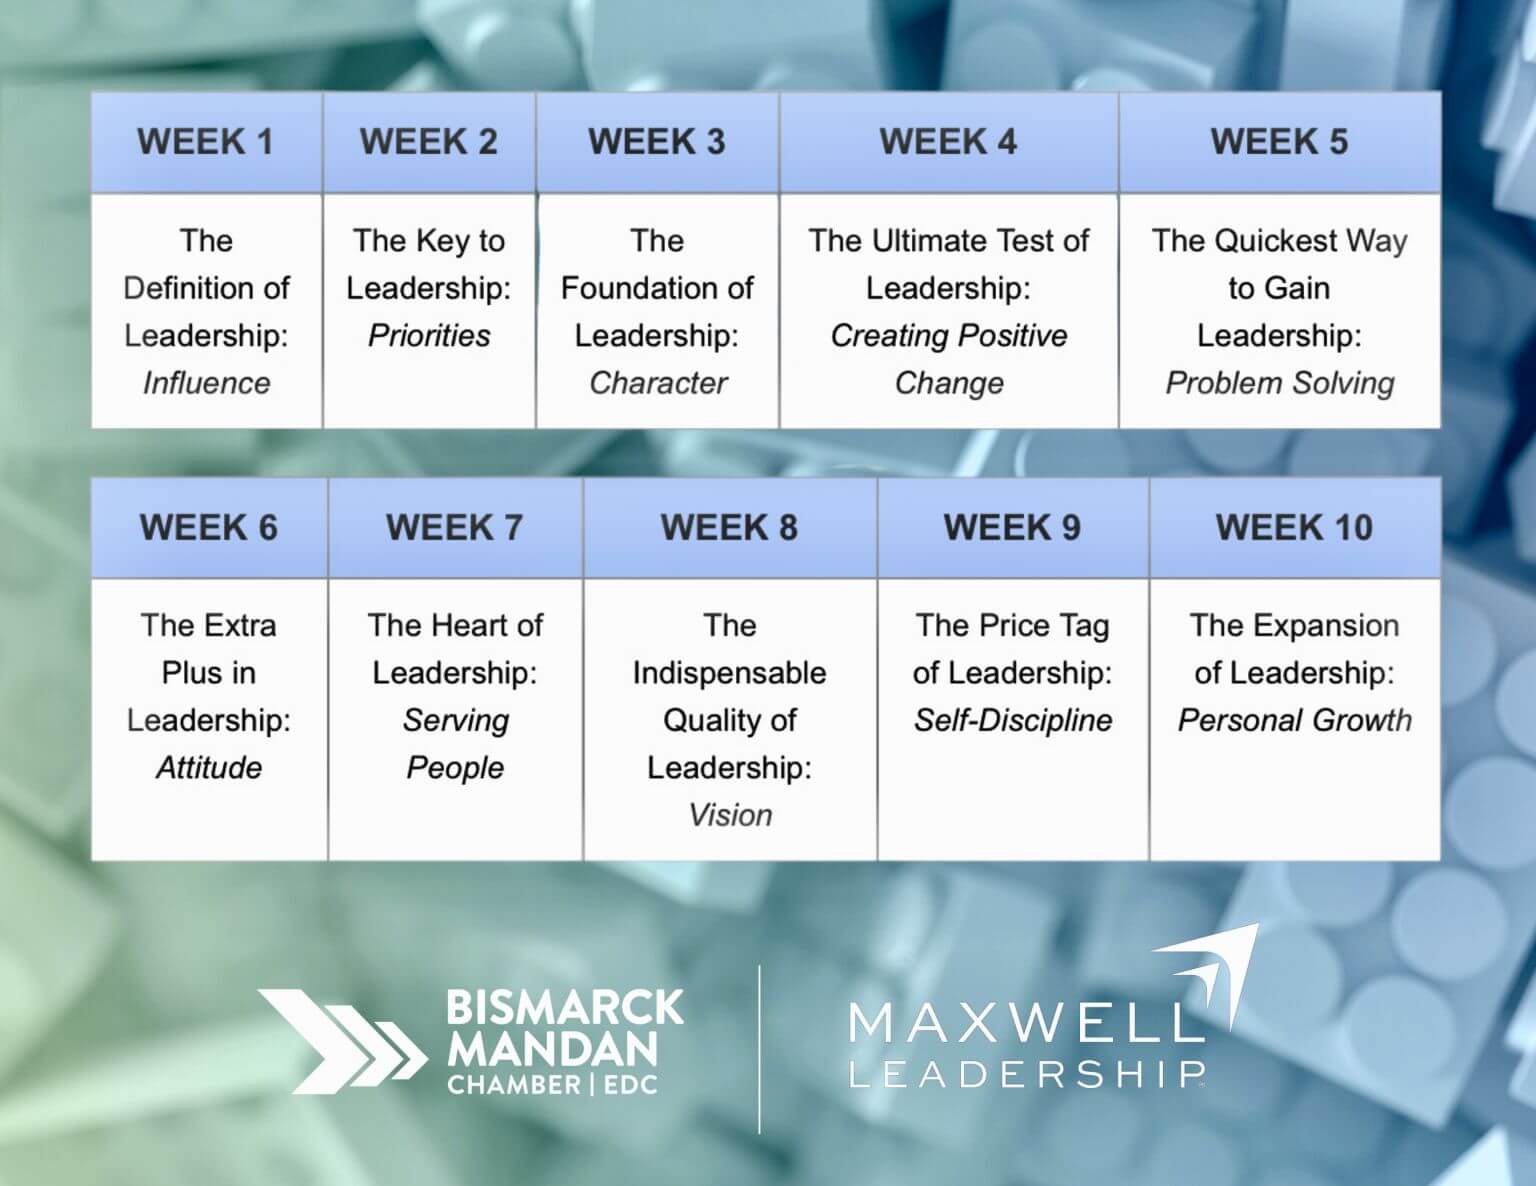 Maxwell Leadership Calendar